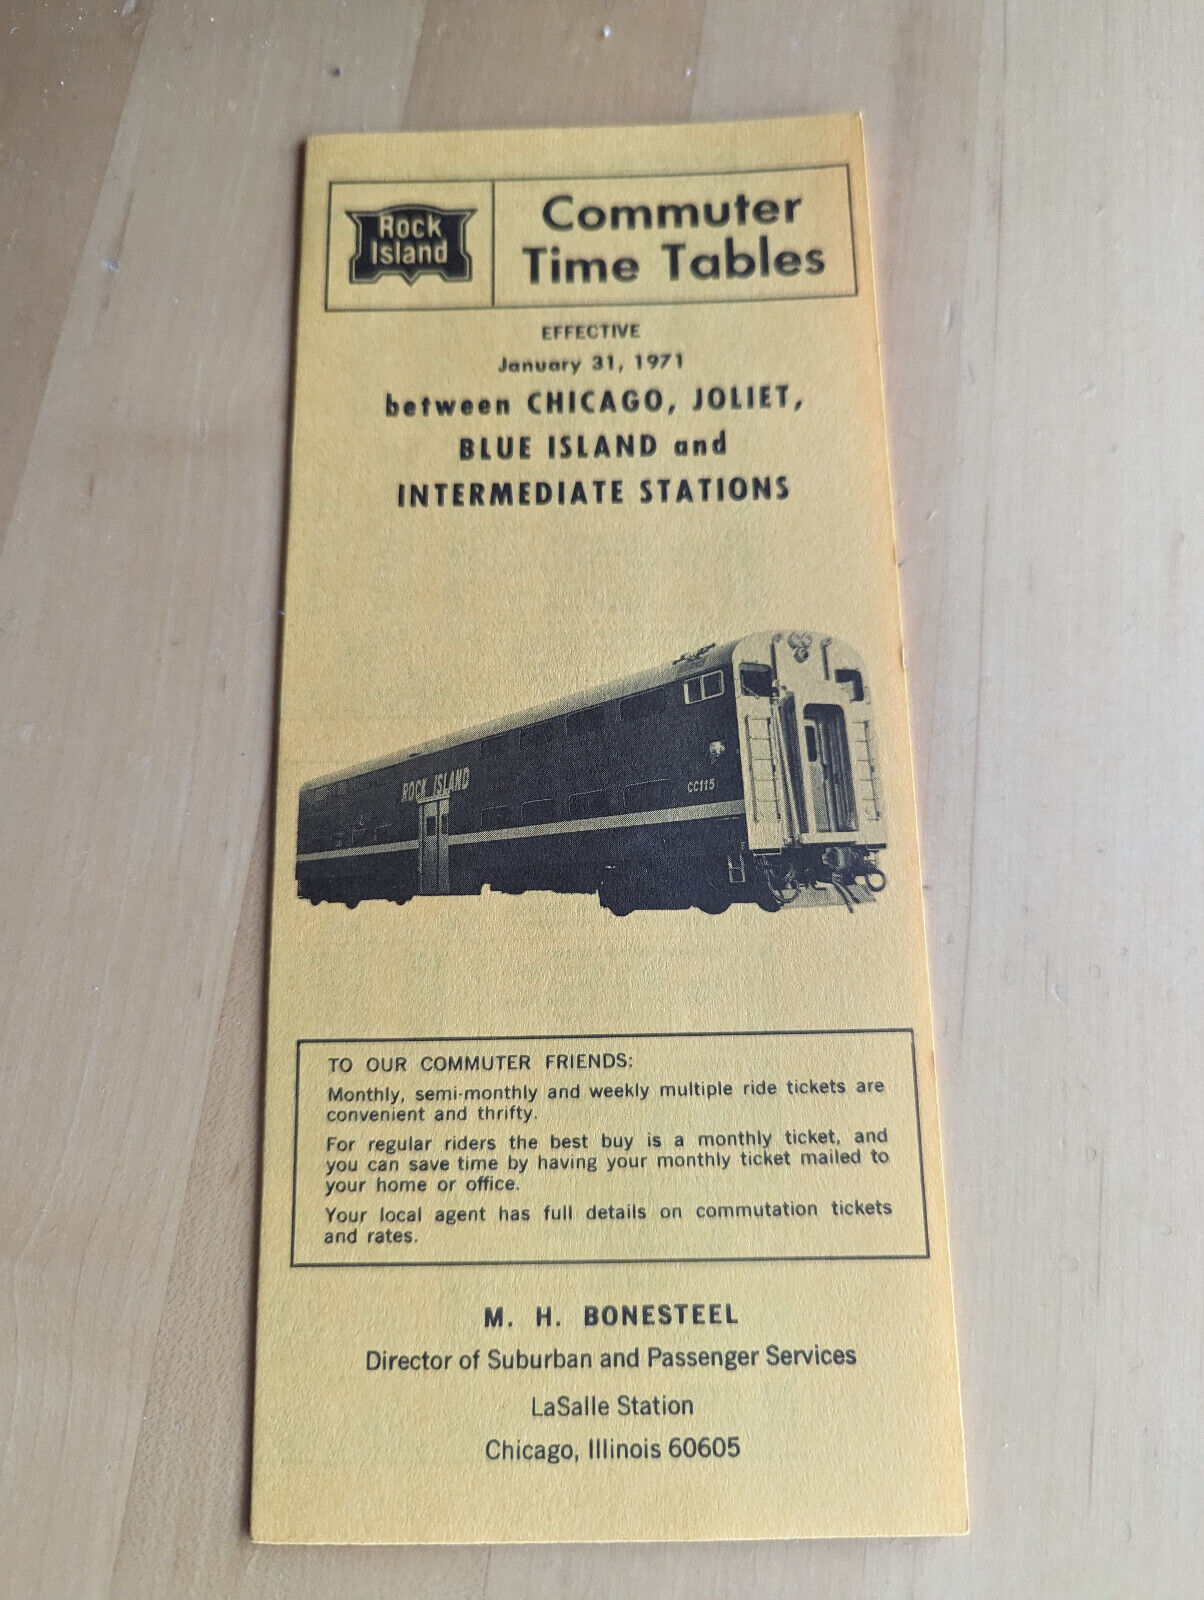 Rock Island Commuter Timetable effective January 31, 1971